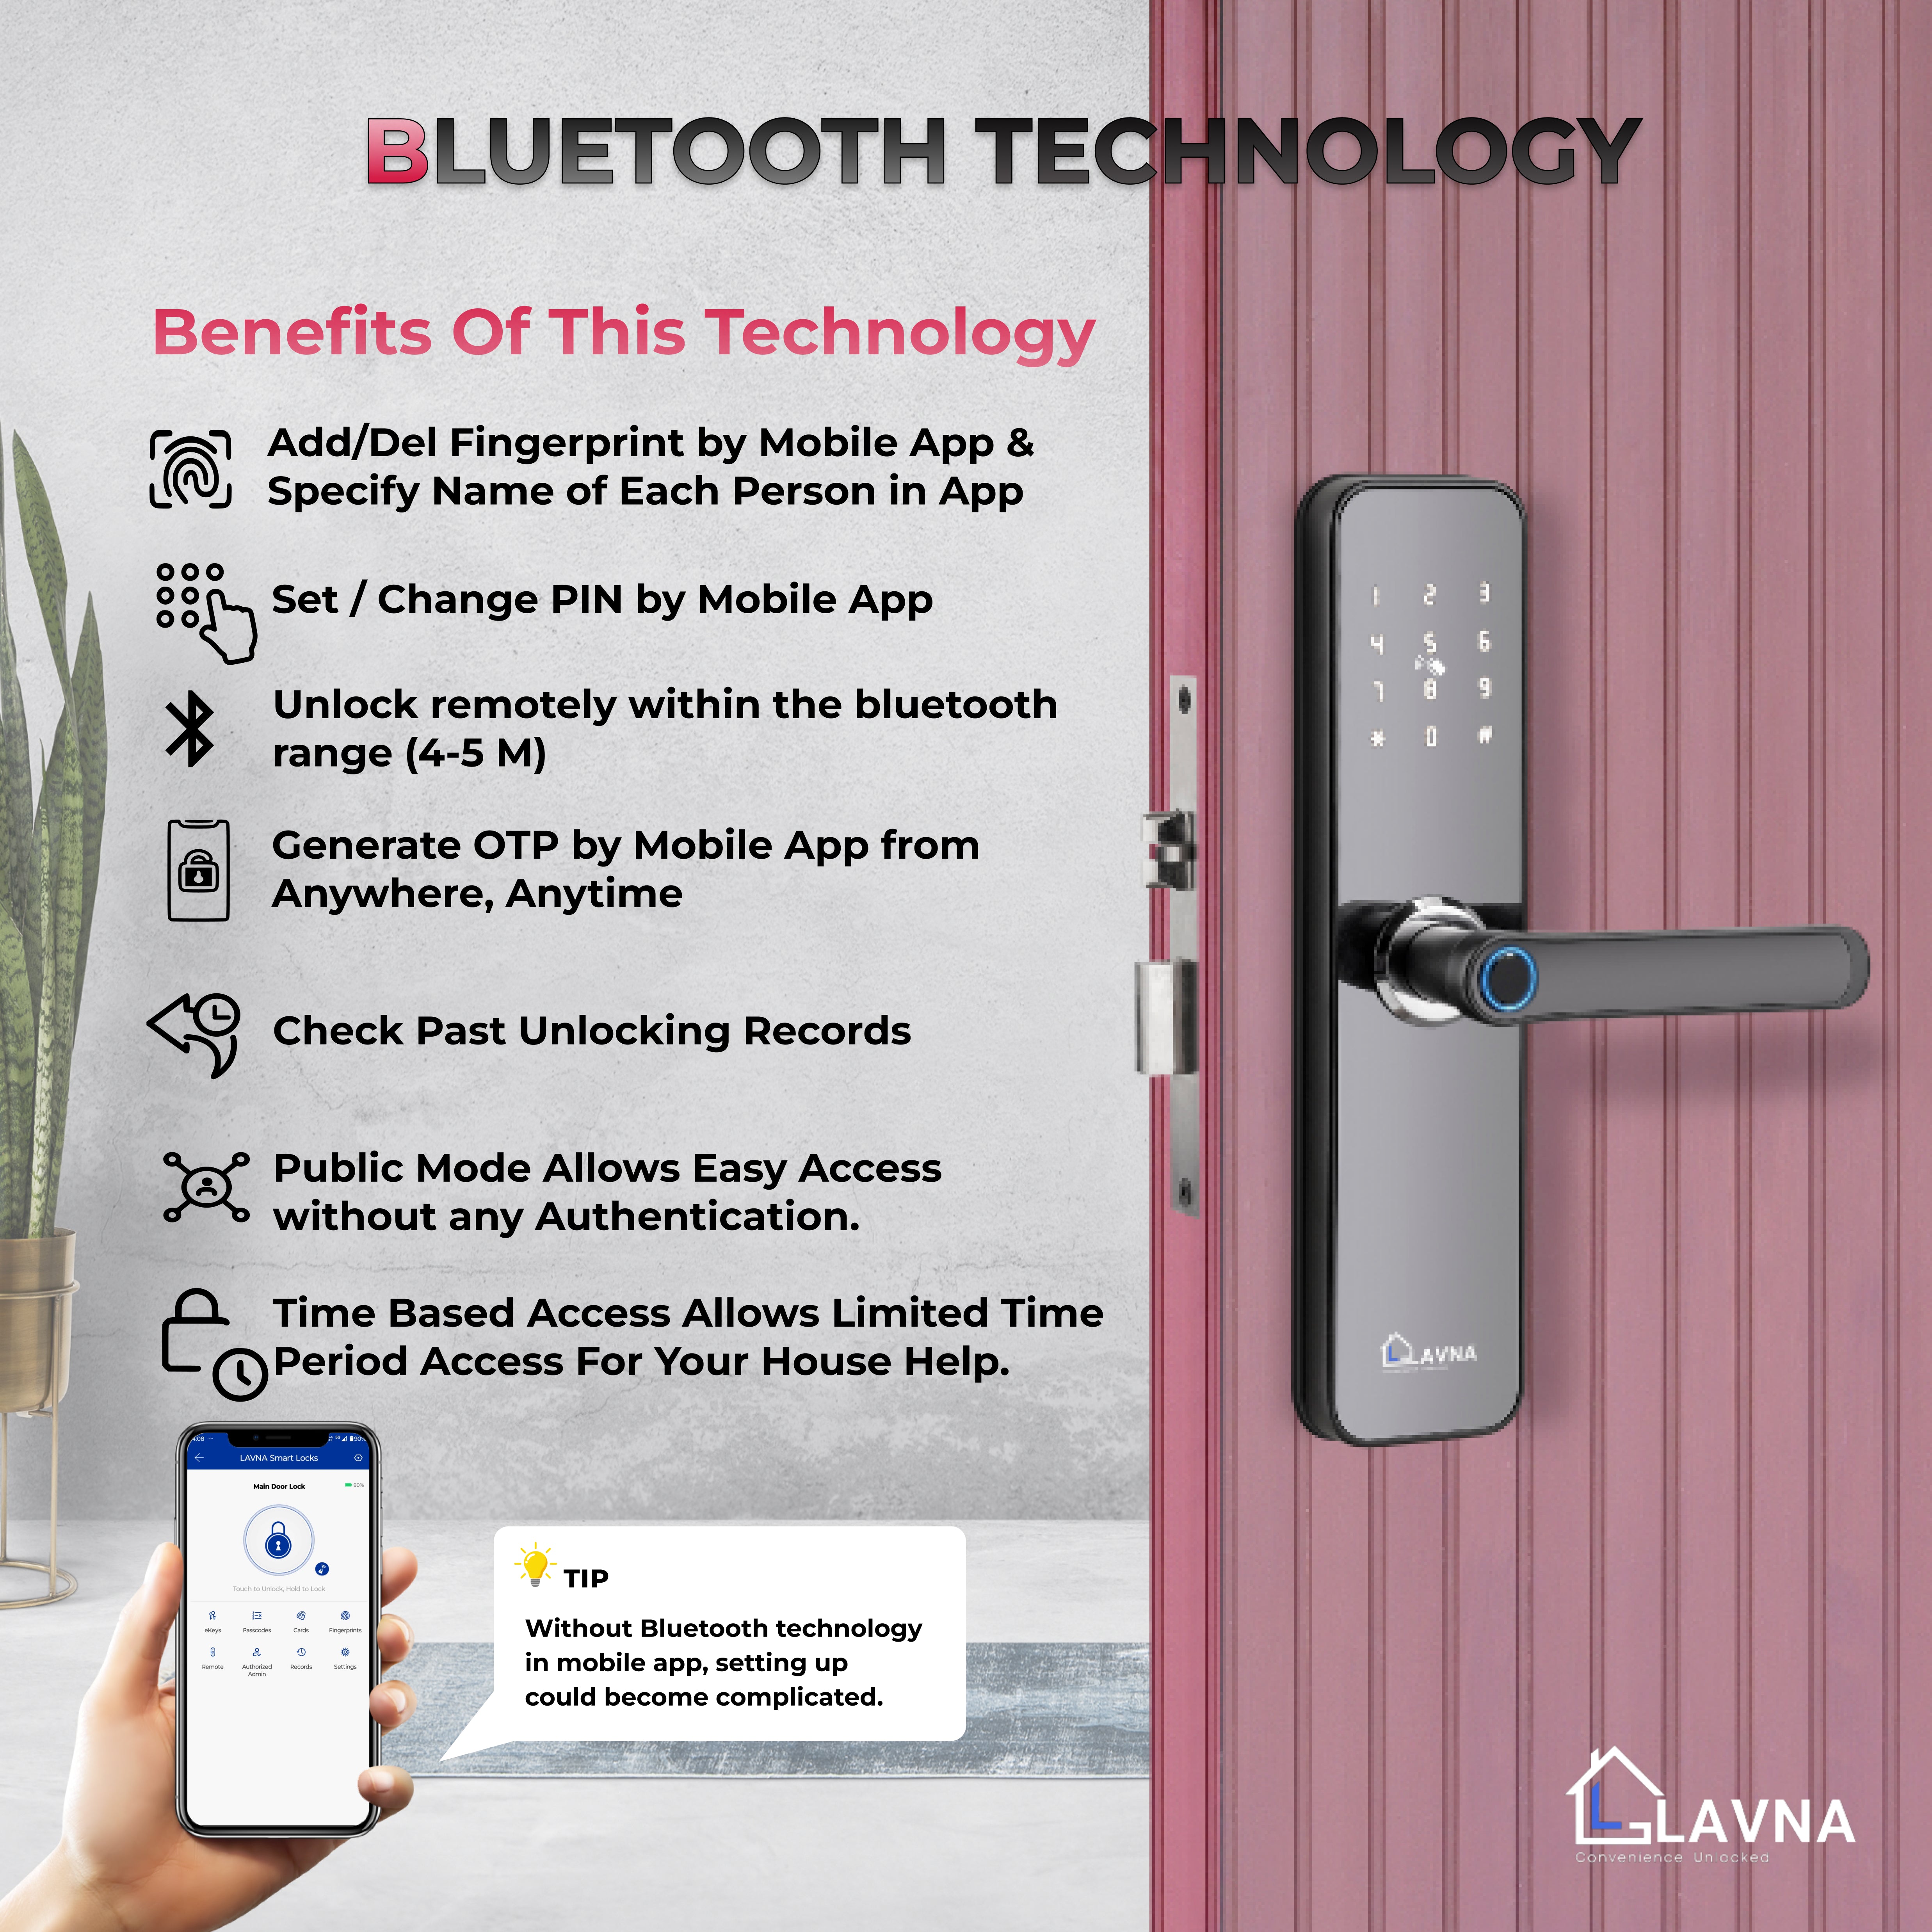 LAVNA LA28 Fingerprint Door Lock with Bluetooth Mobile App, Fingerprint, OTP, PIN, RFID Card and Manual Key 6 way Access for Wooden Doors